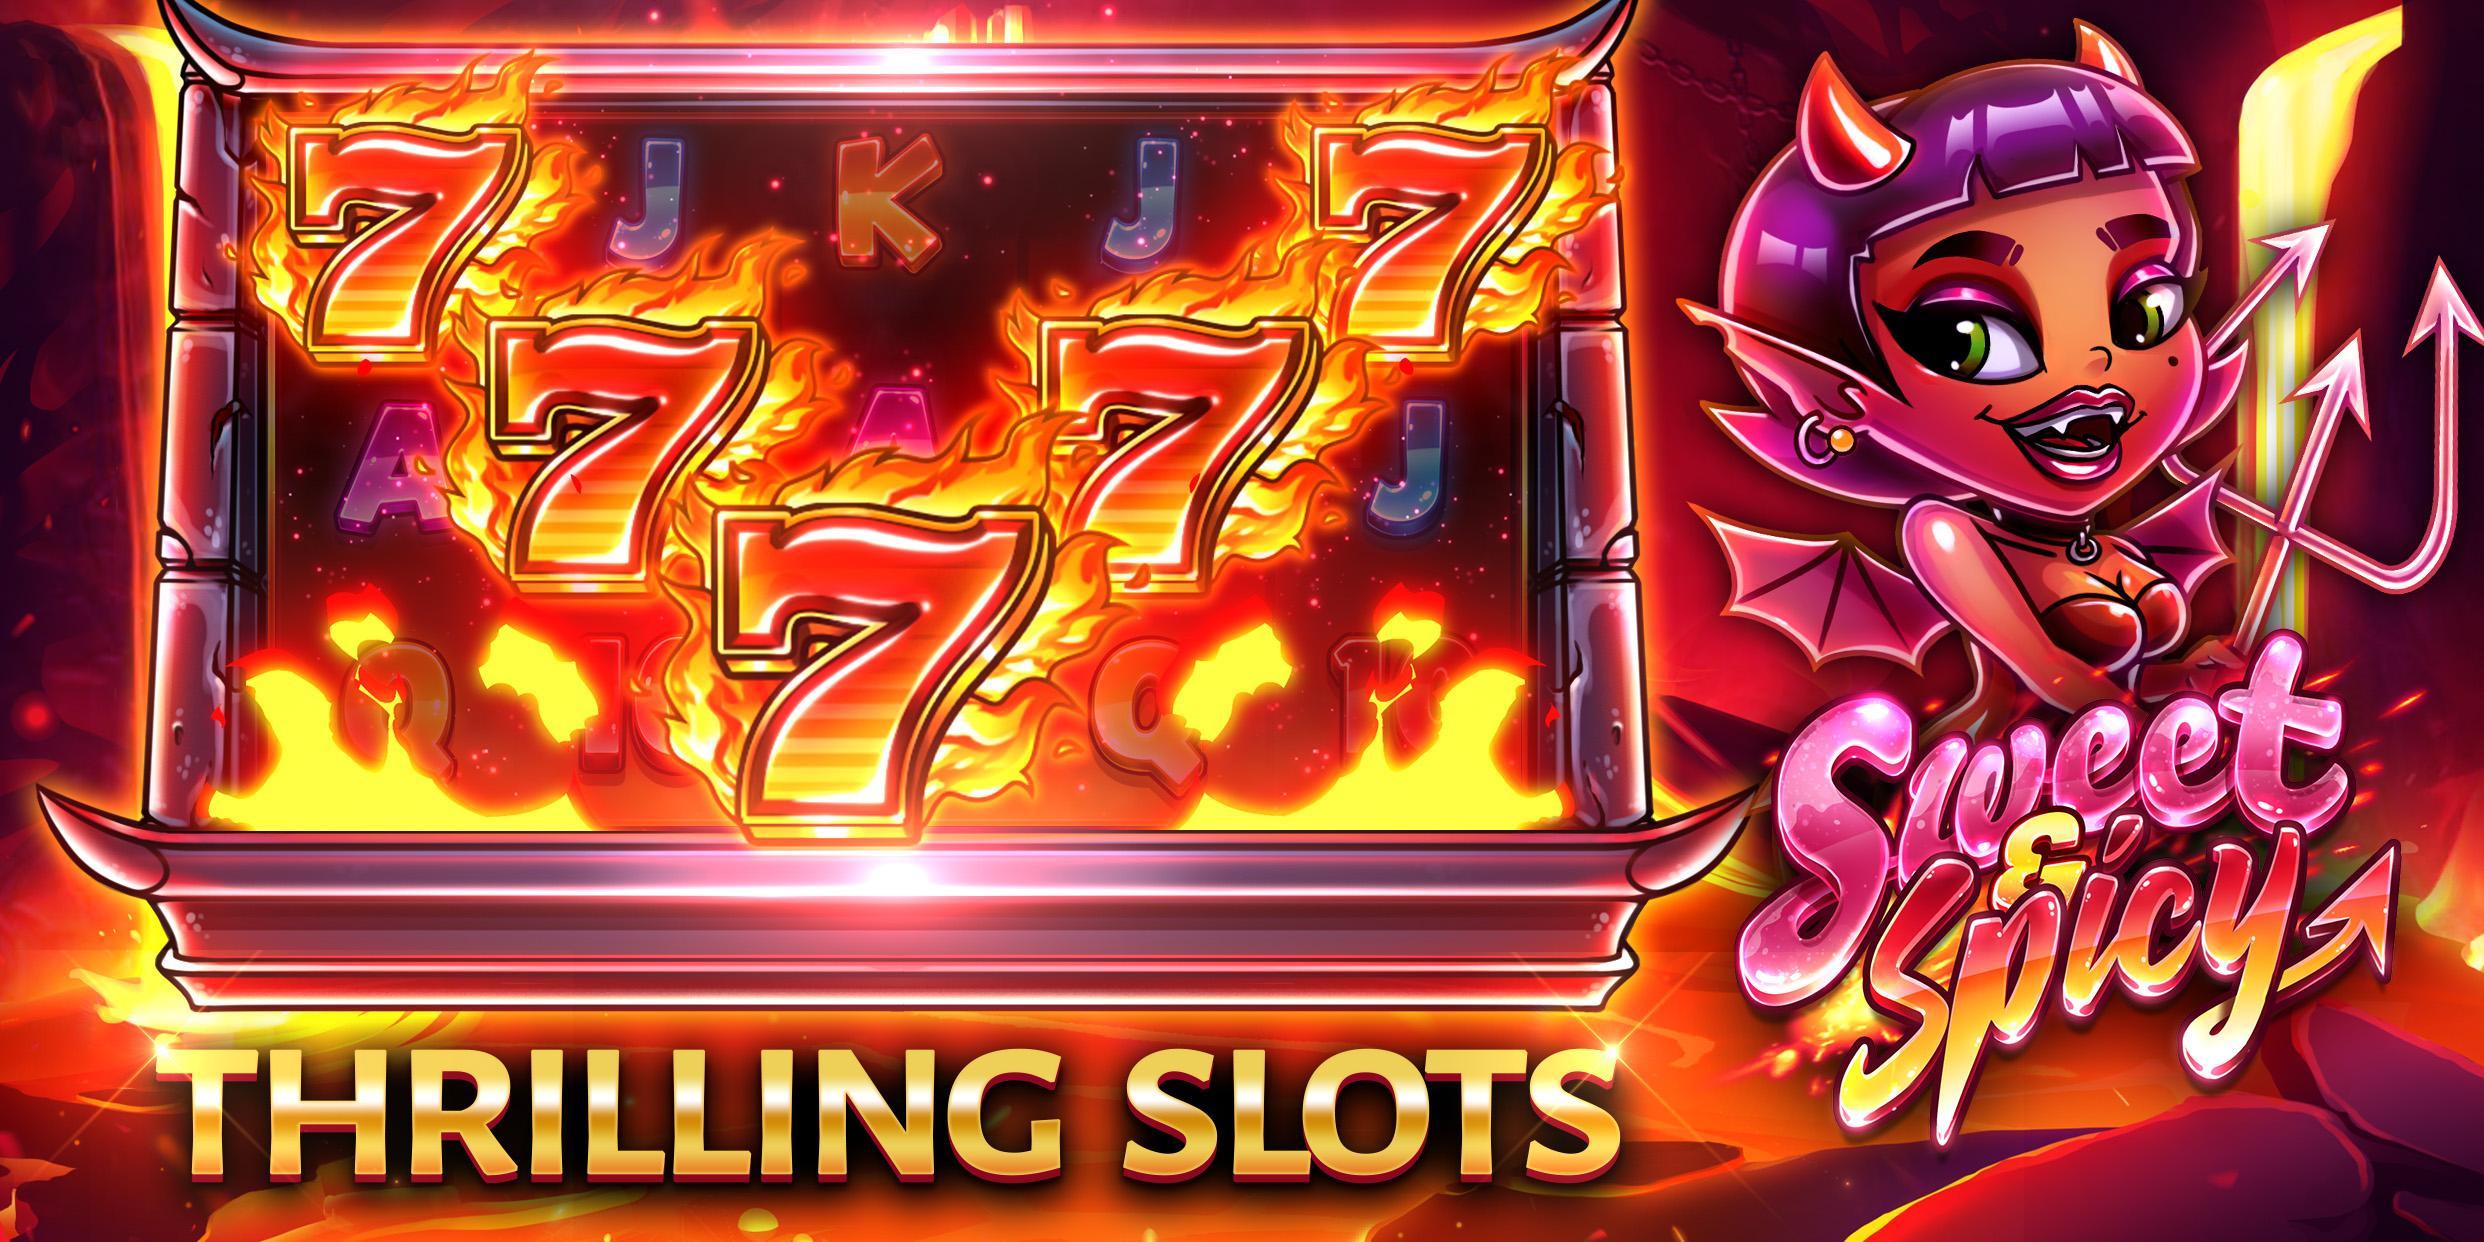 New jinse dao dragon slot machine, feature youtube